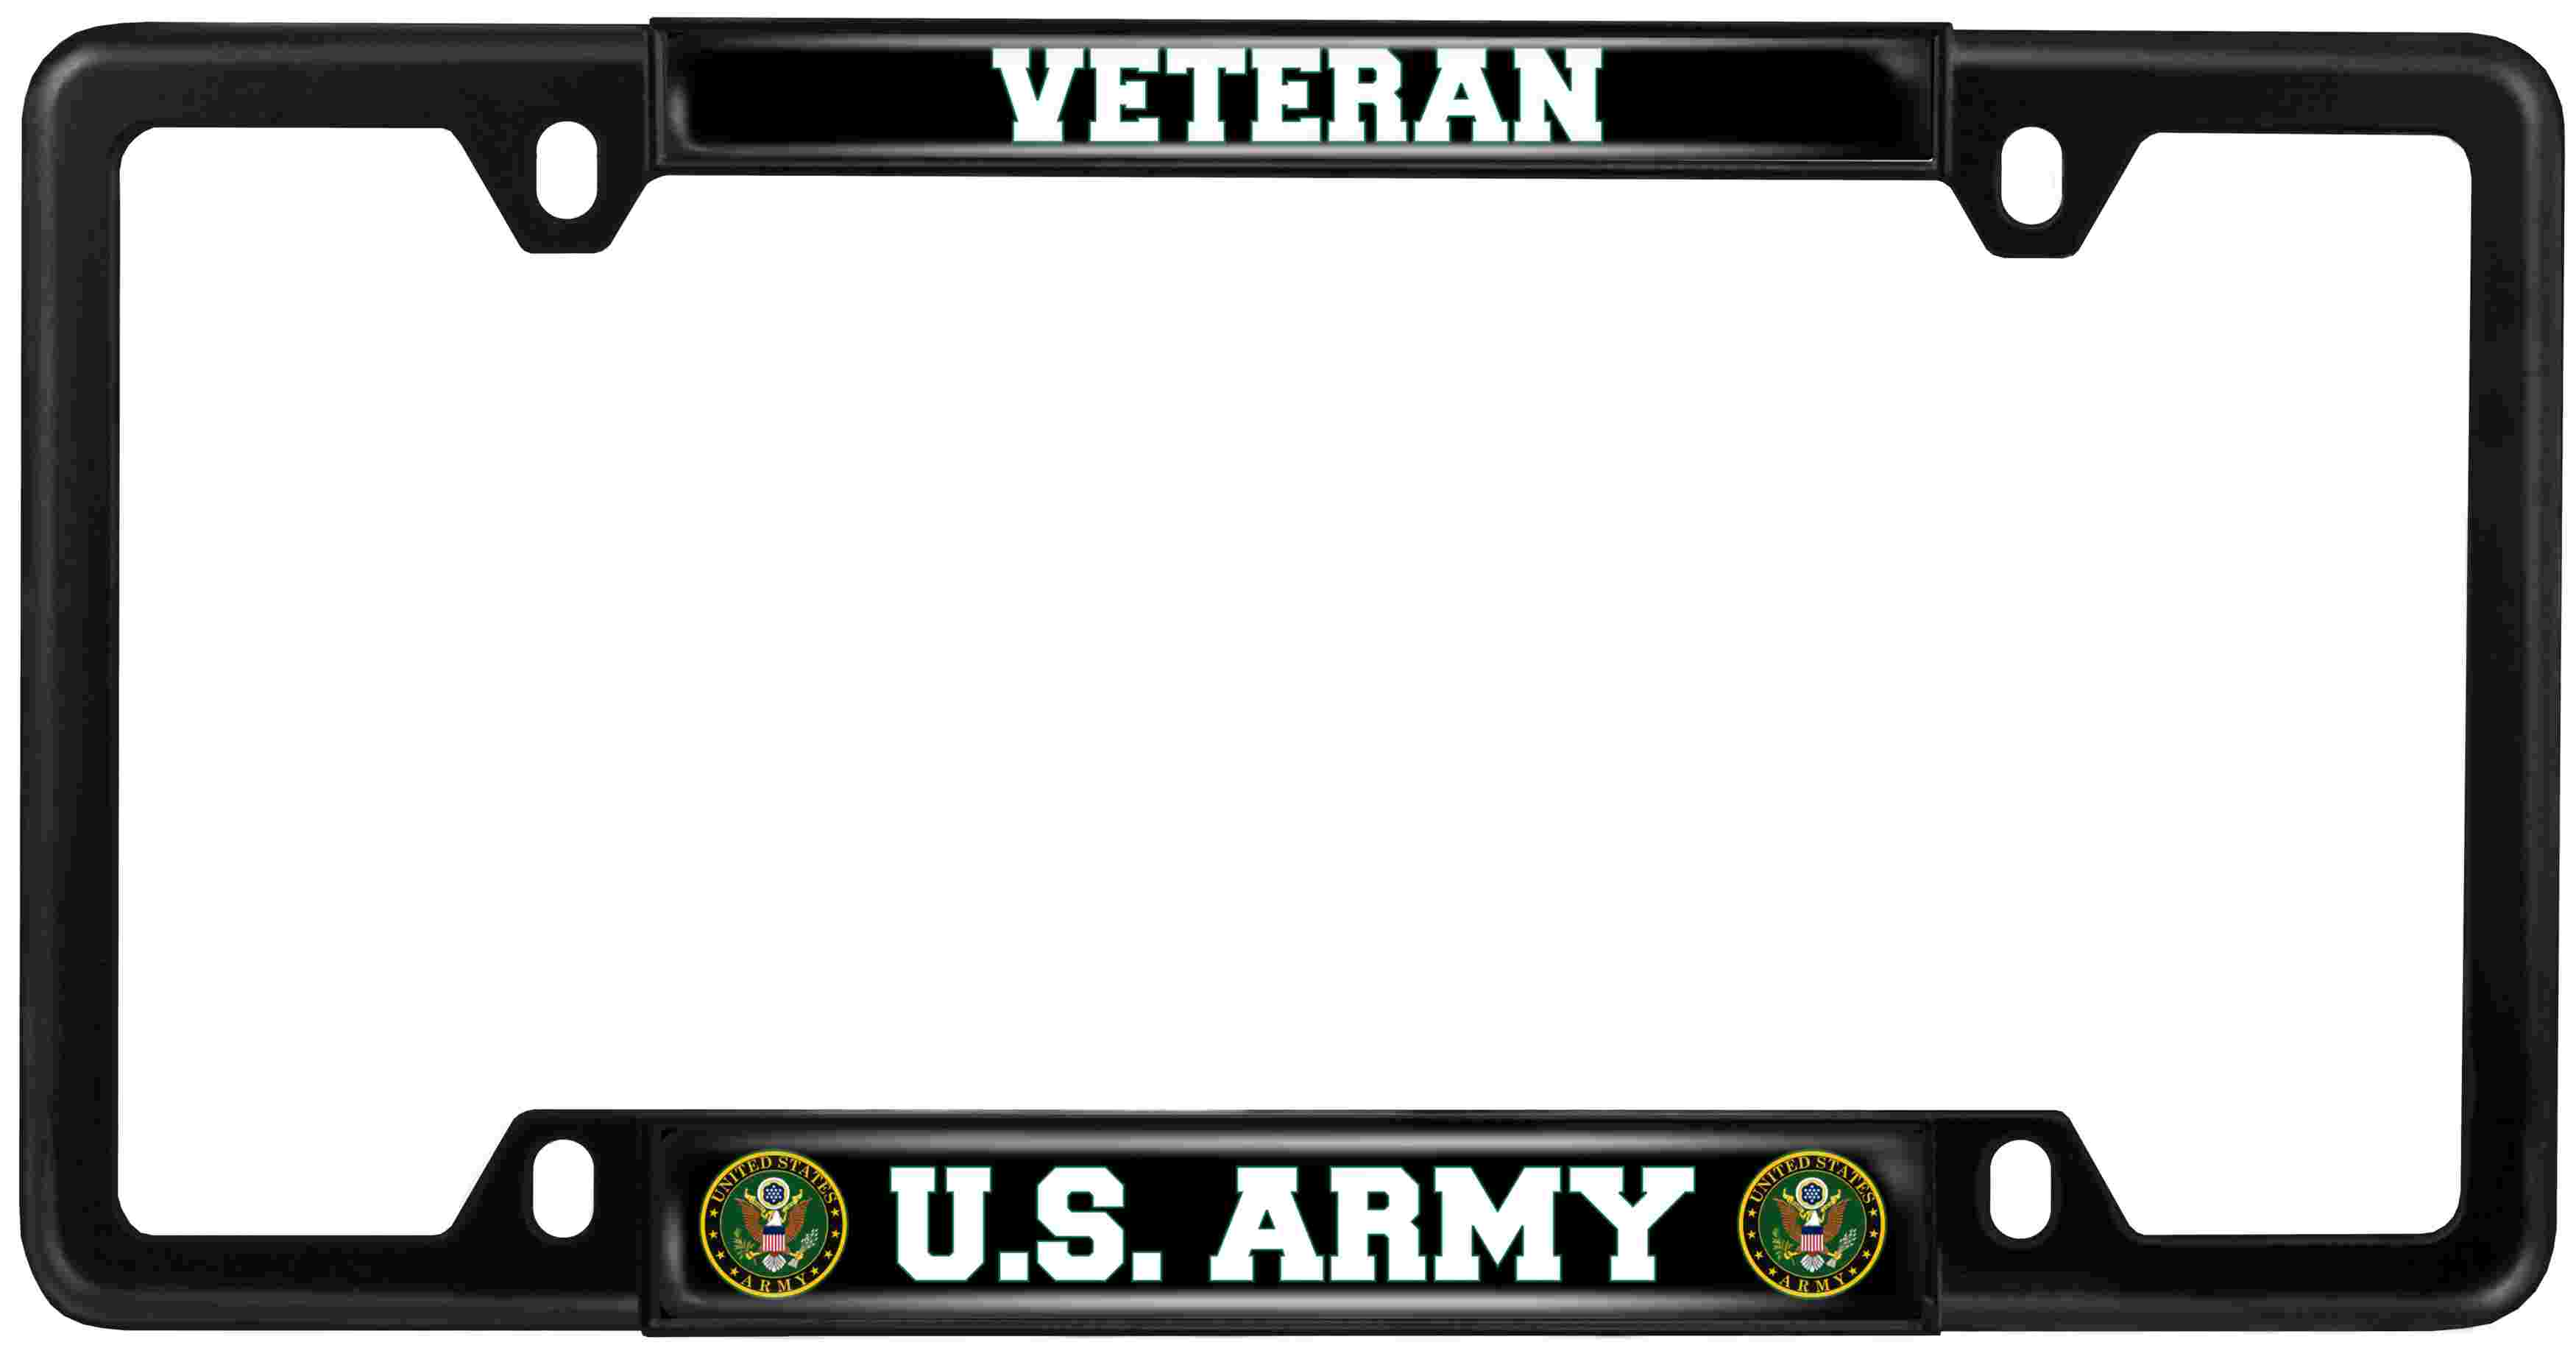 U.S. Army Veteran - Car Metal License Plate Frame